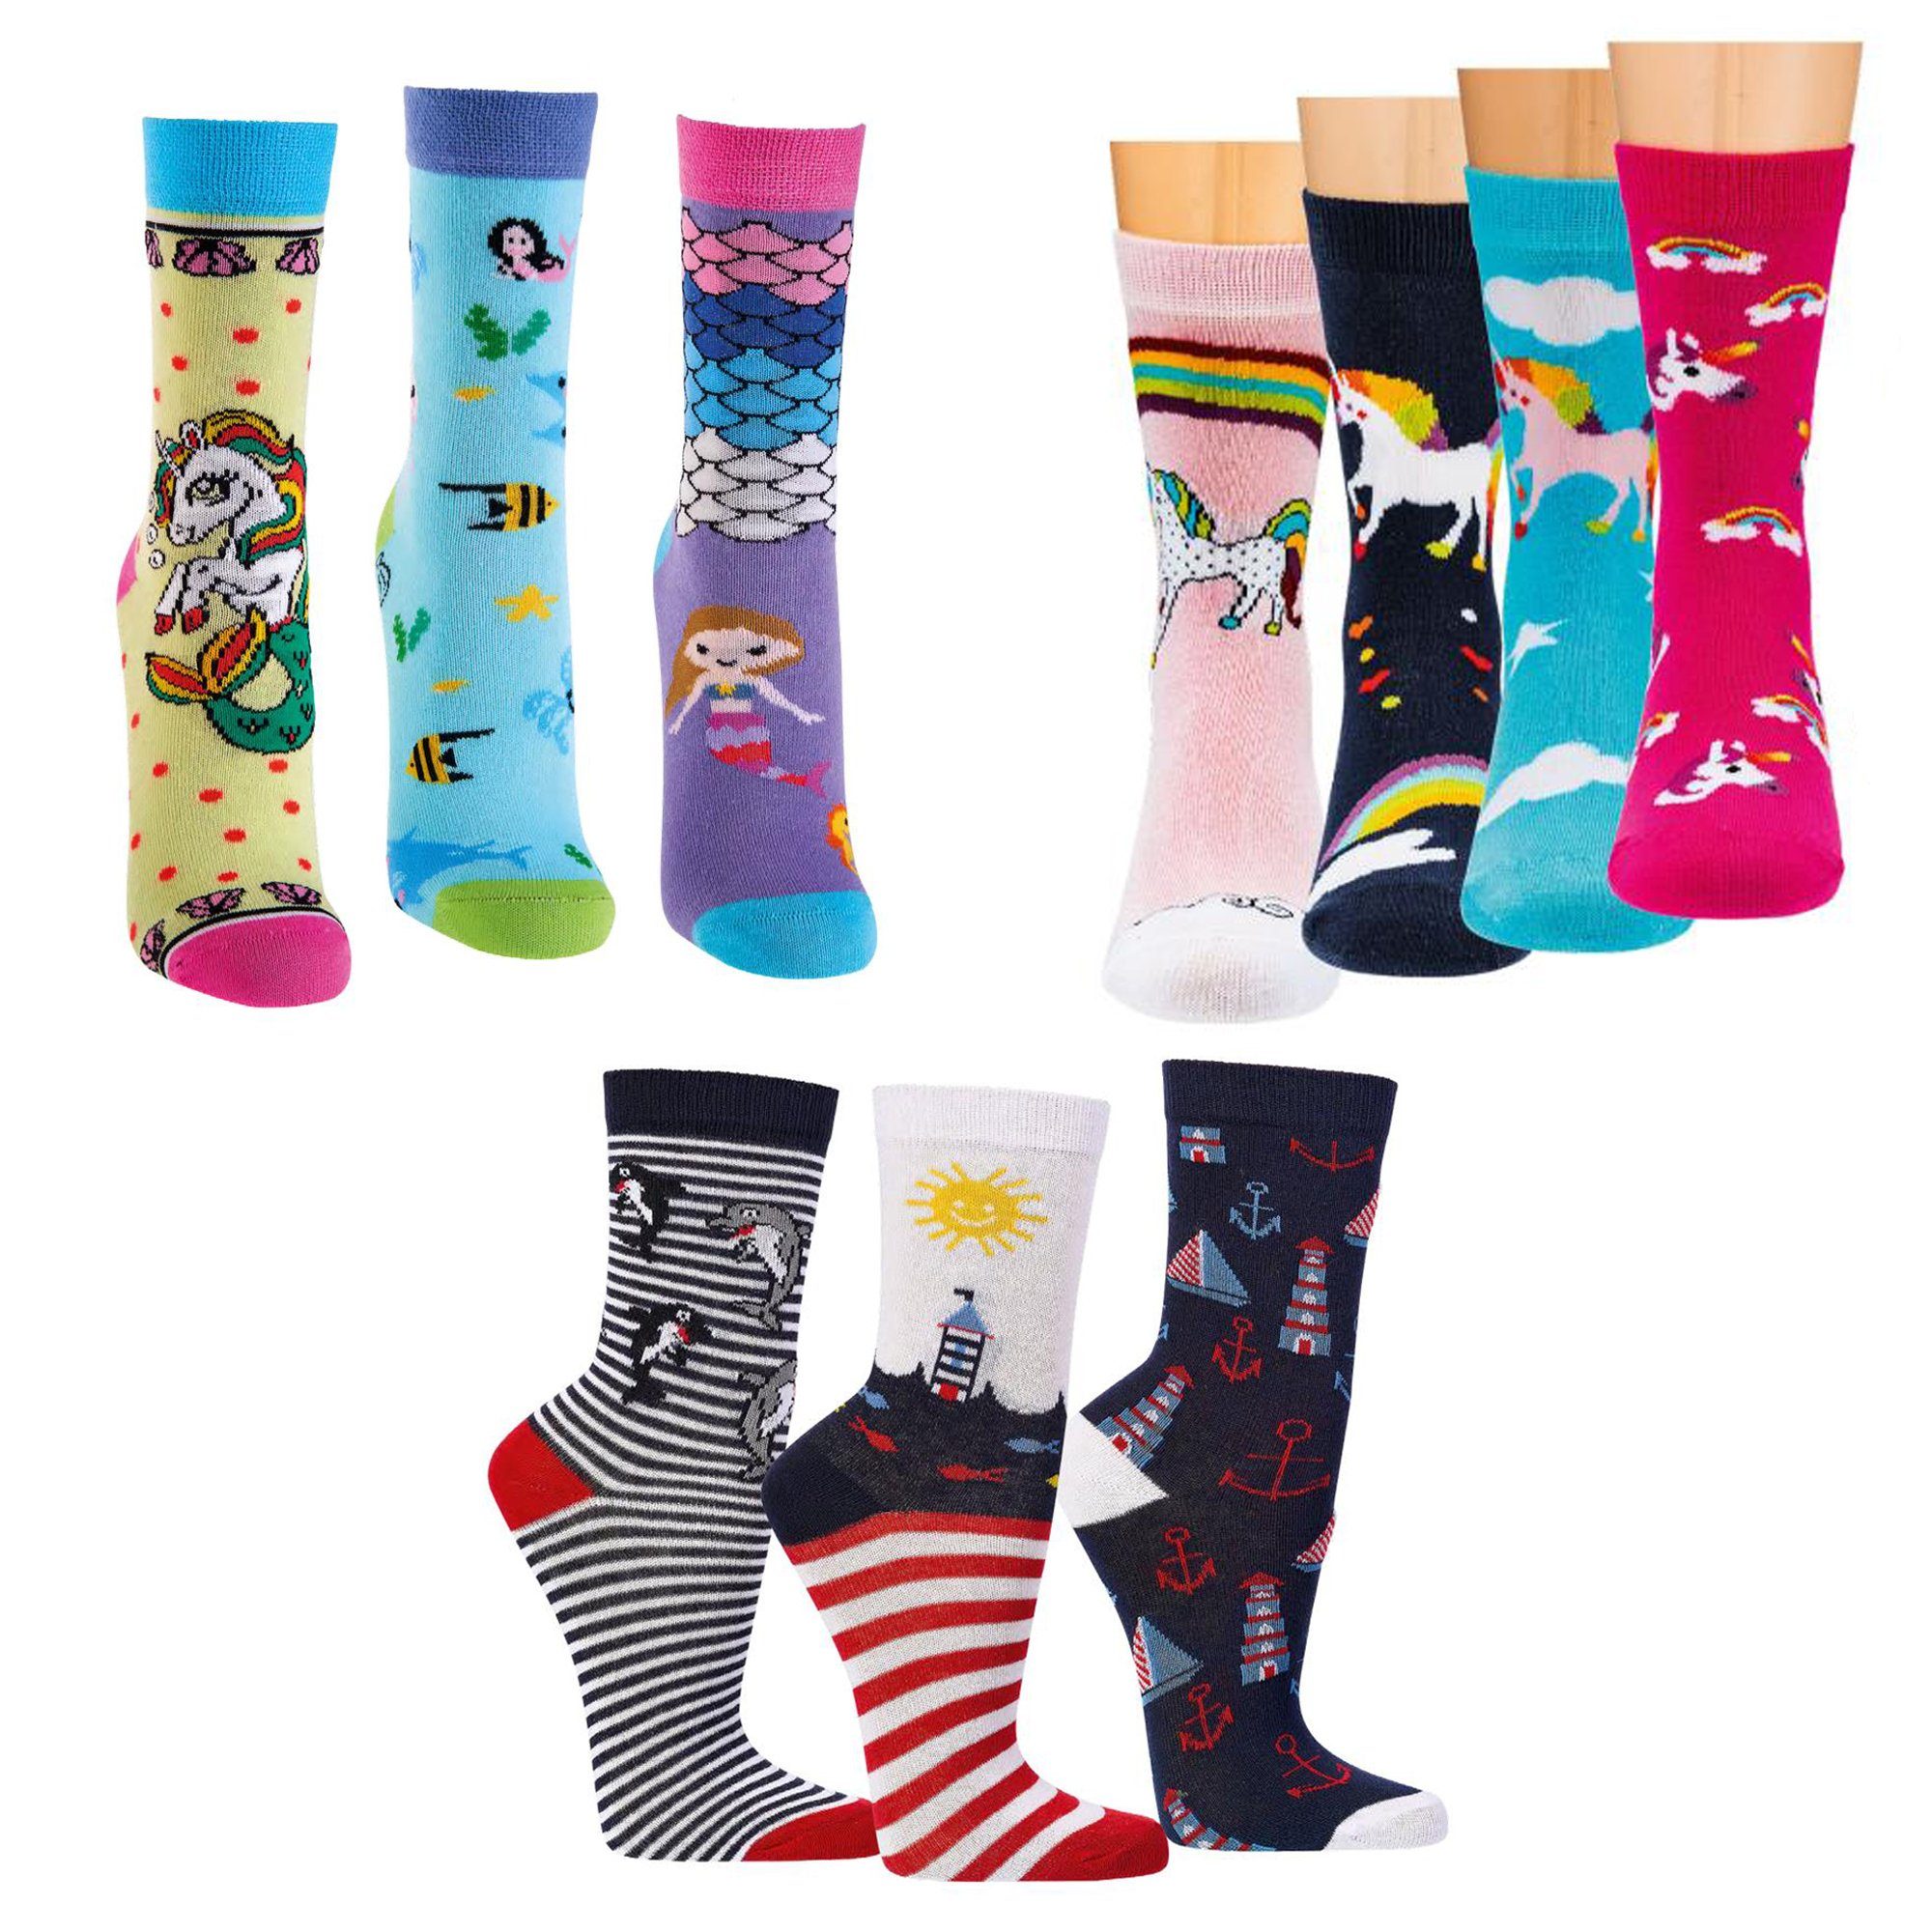 Socks 4 Fun Langsocken 3189 (Packung, 9-Paar, 9 Paar) Motiv Kinder Socken,  Jungen & Mädchen mit Baumwolle, Kindersocken